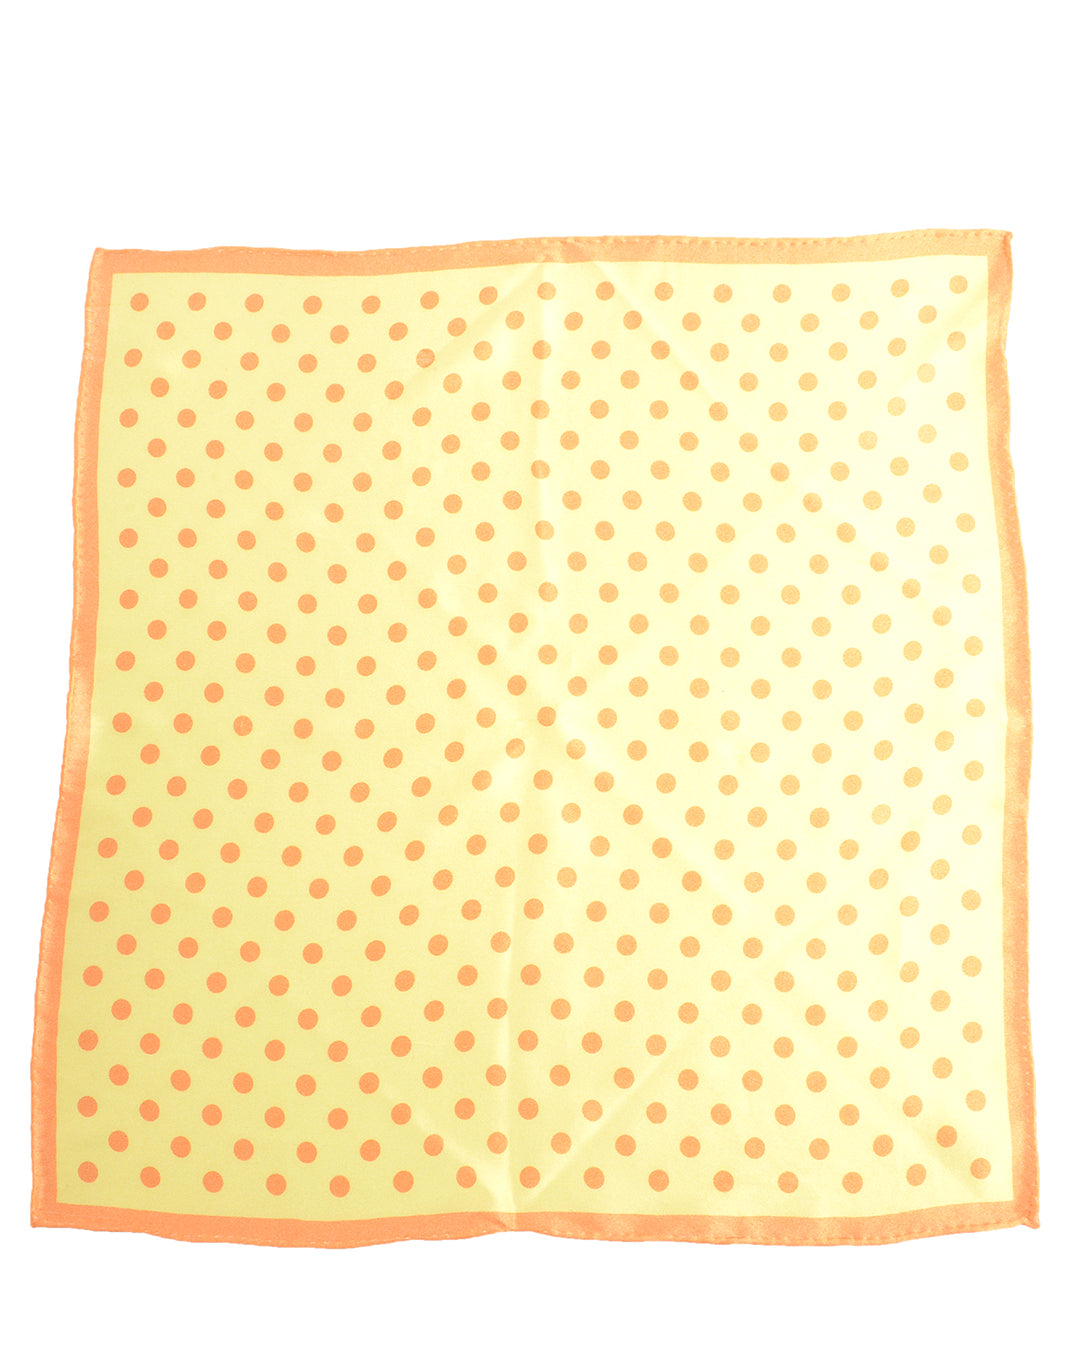 Pocket Square - Big Orange Polka Dots on Yellow